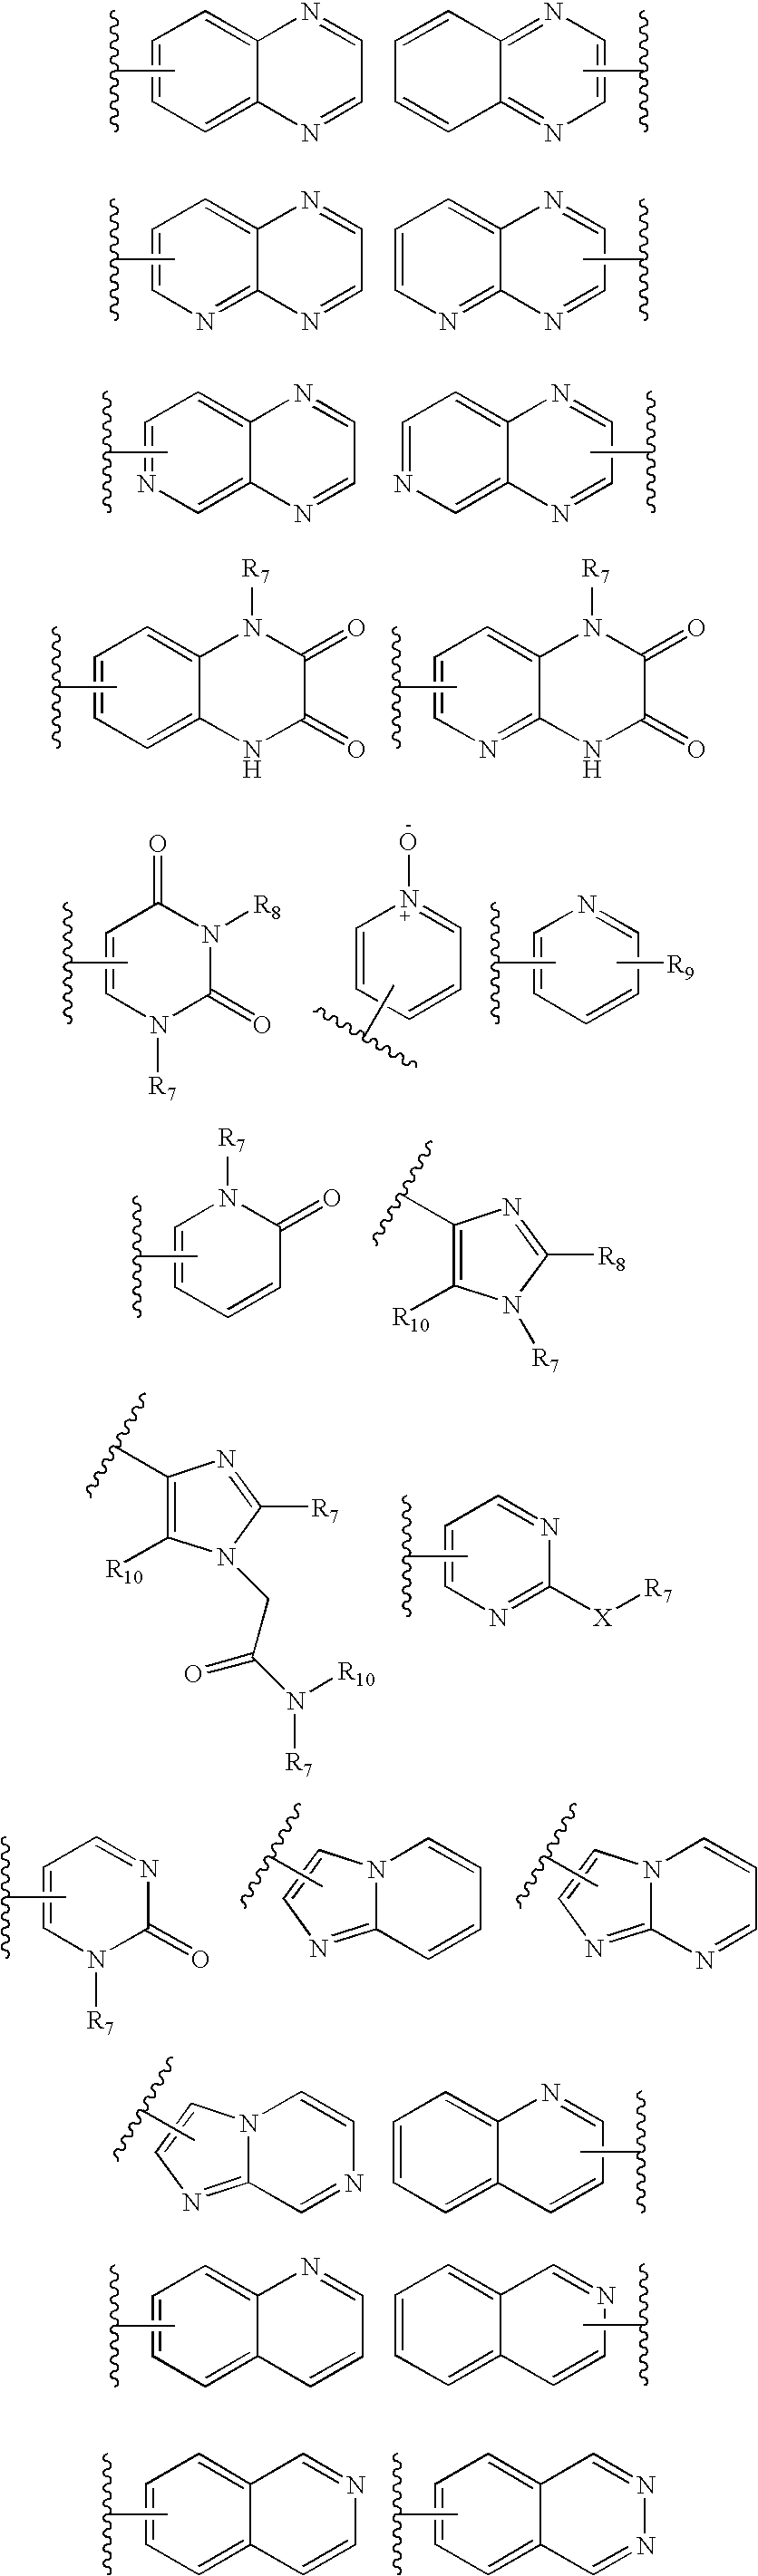 4-Substituted imidazo[4,5-c]pyridine antagonists of gonadotropin releasing hormone receptor